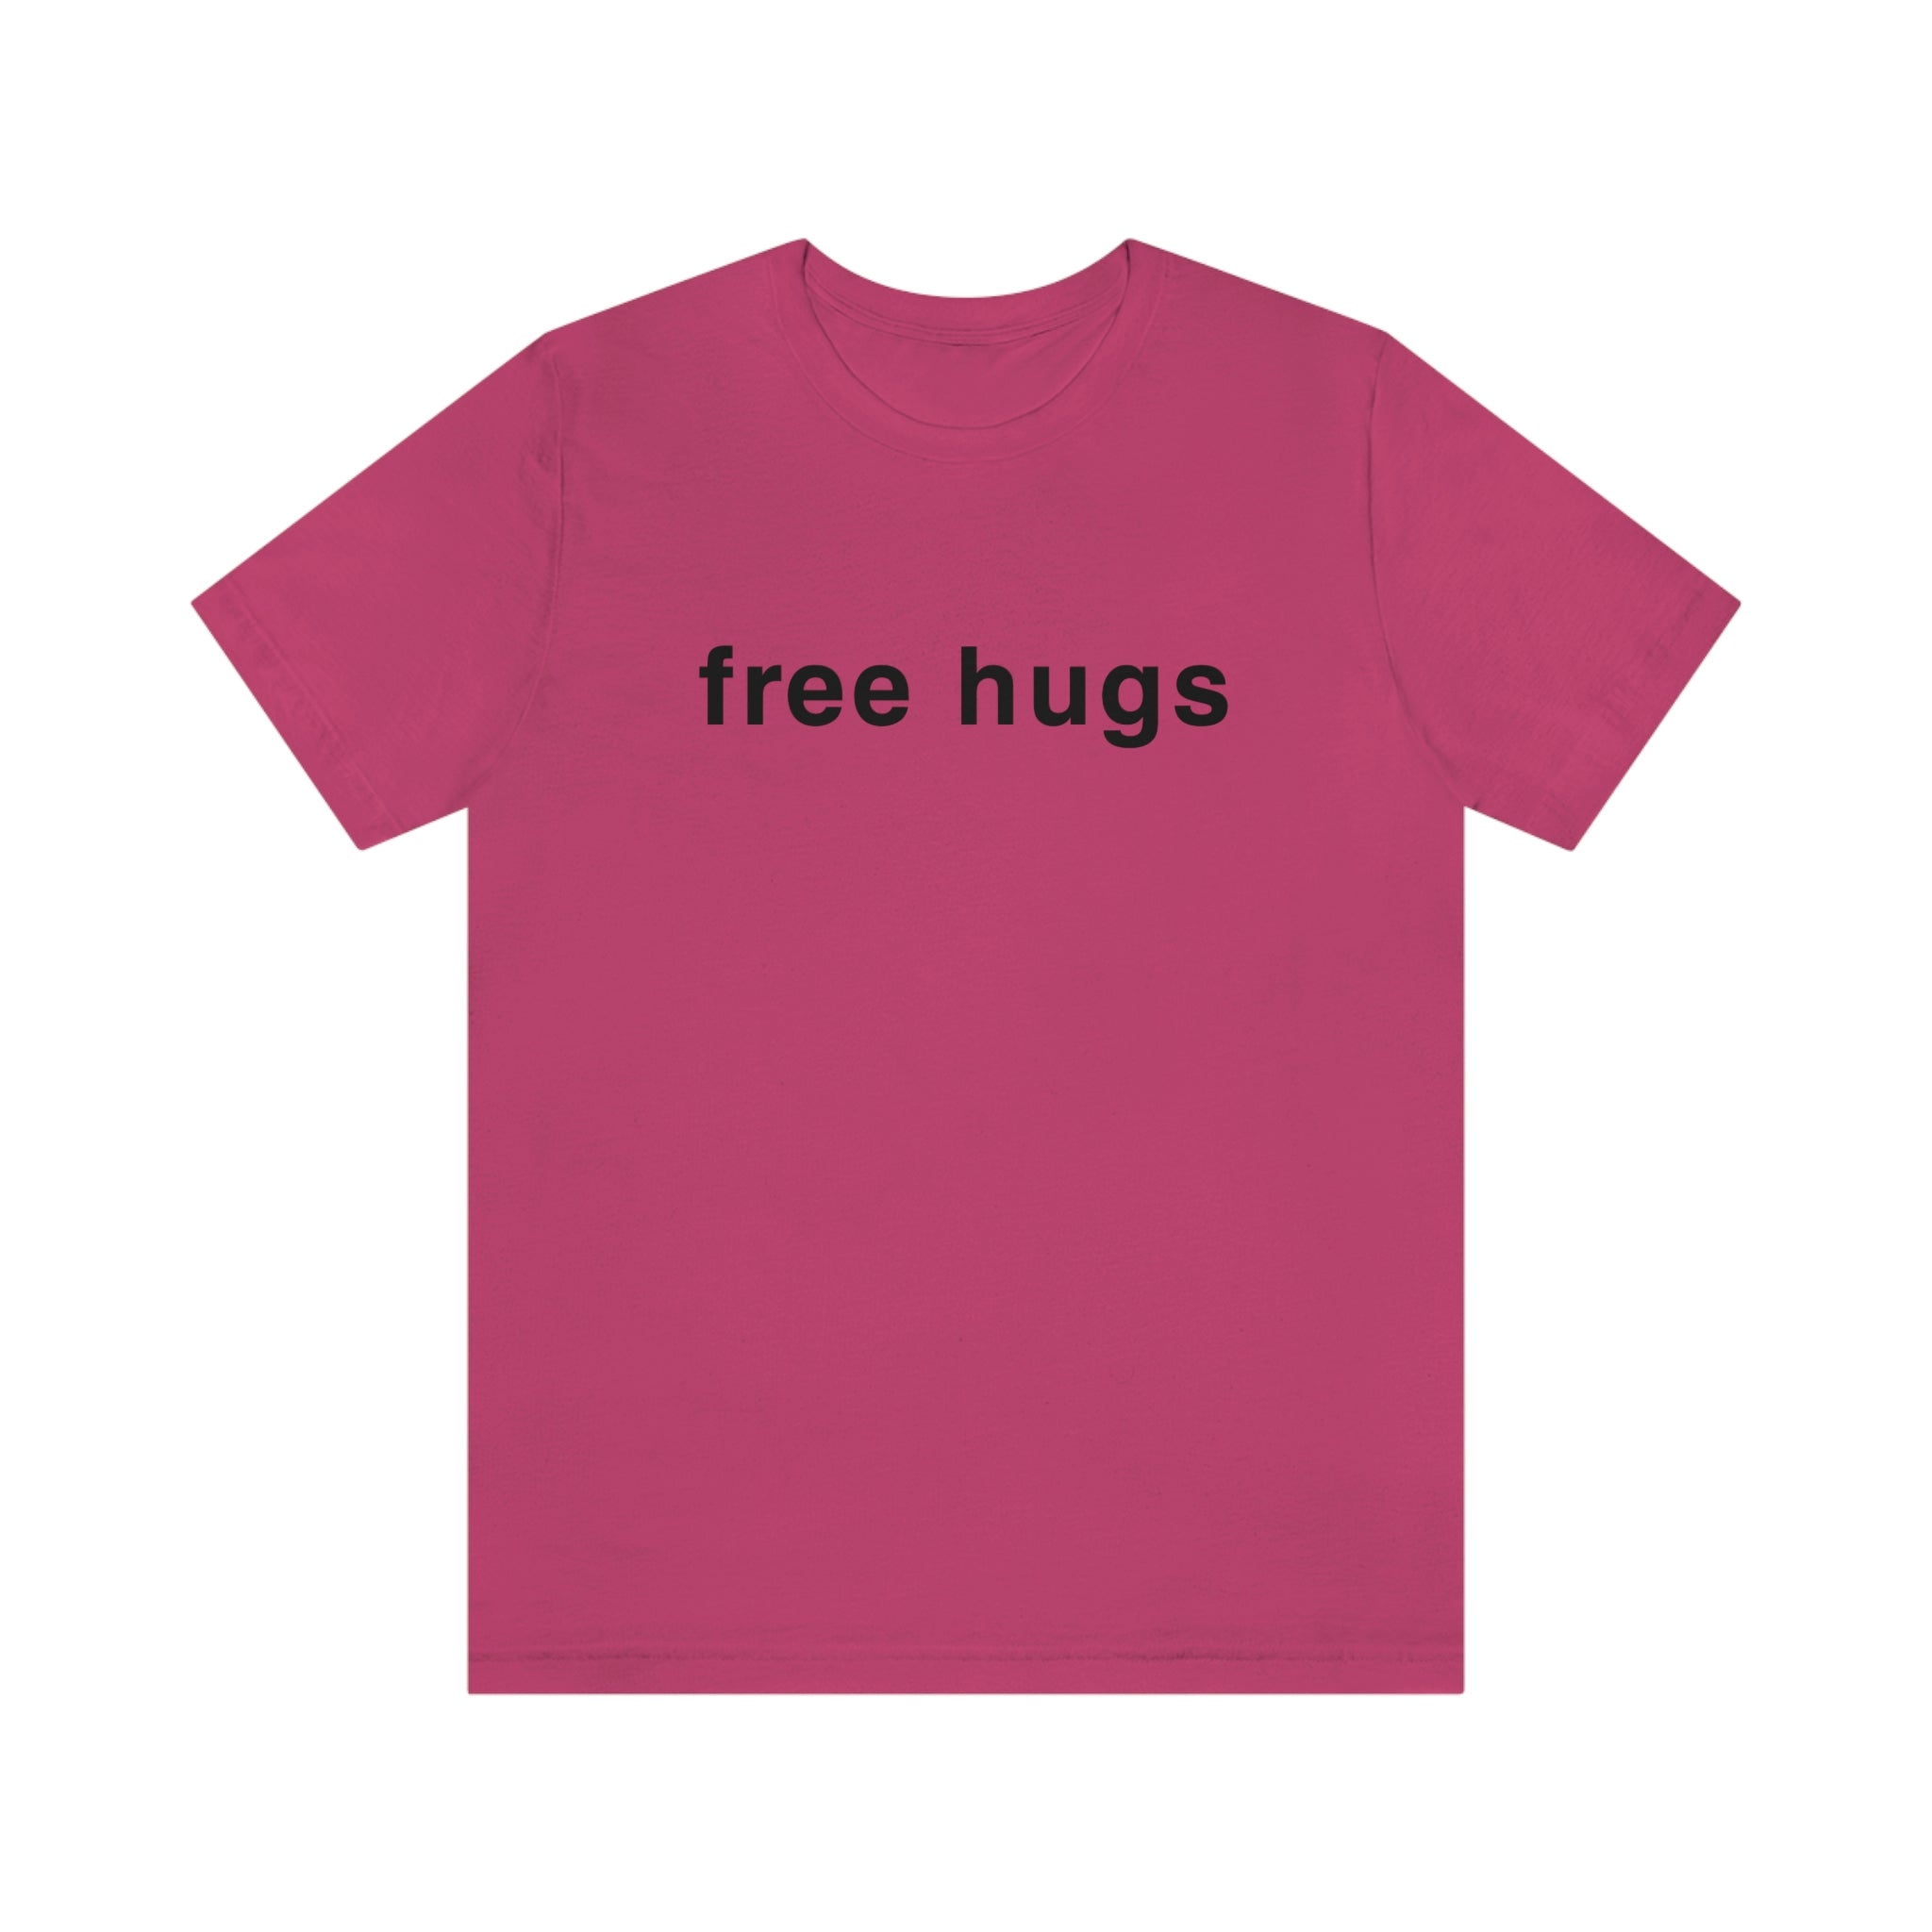 Unbranded - free hugs : Unisex 100% Comfy Cotton T-Shirt